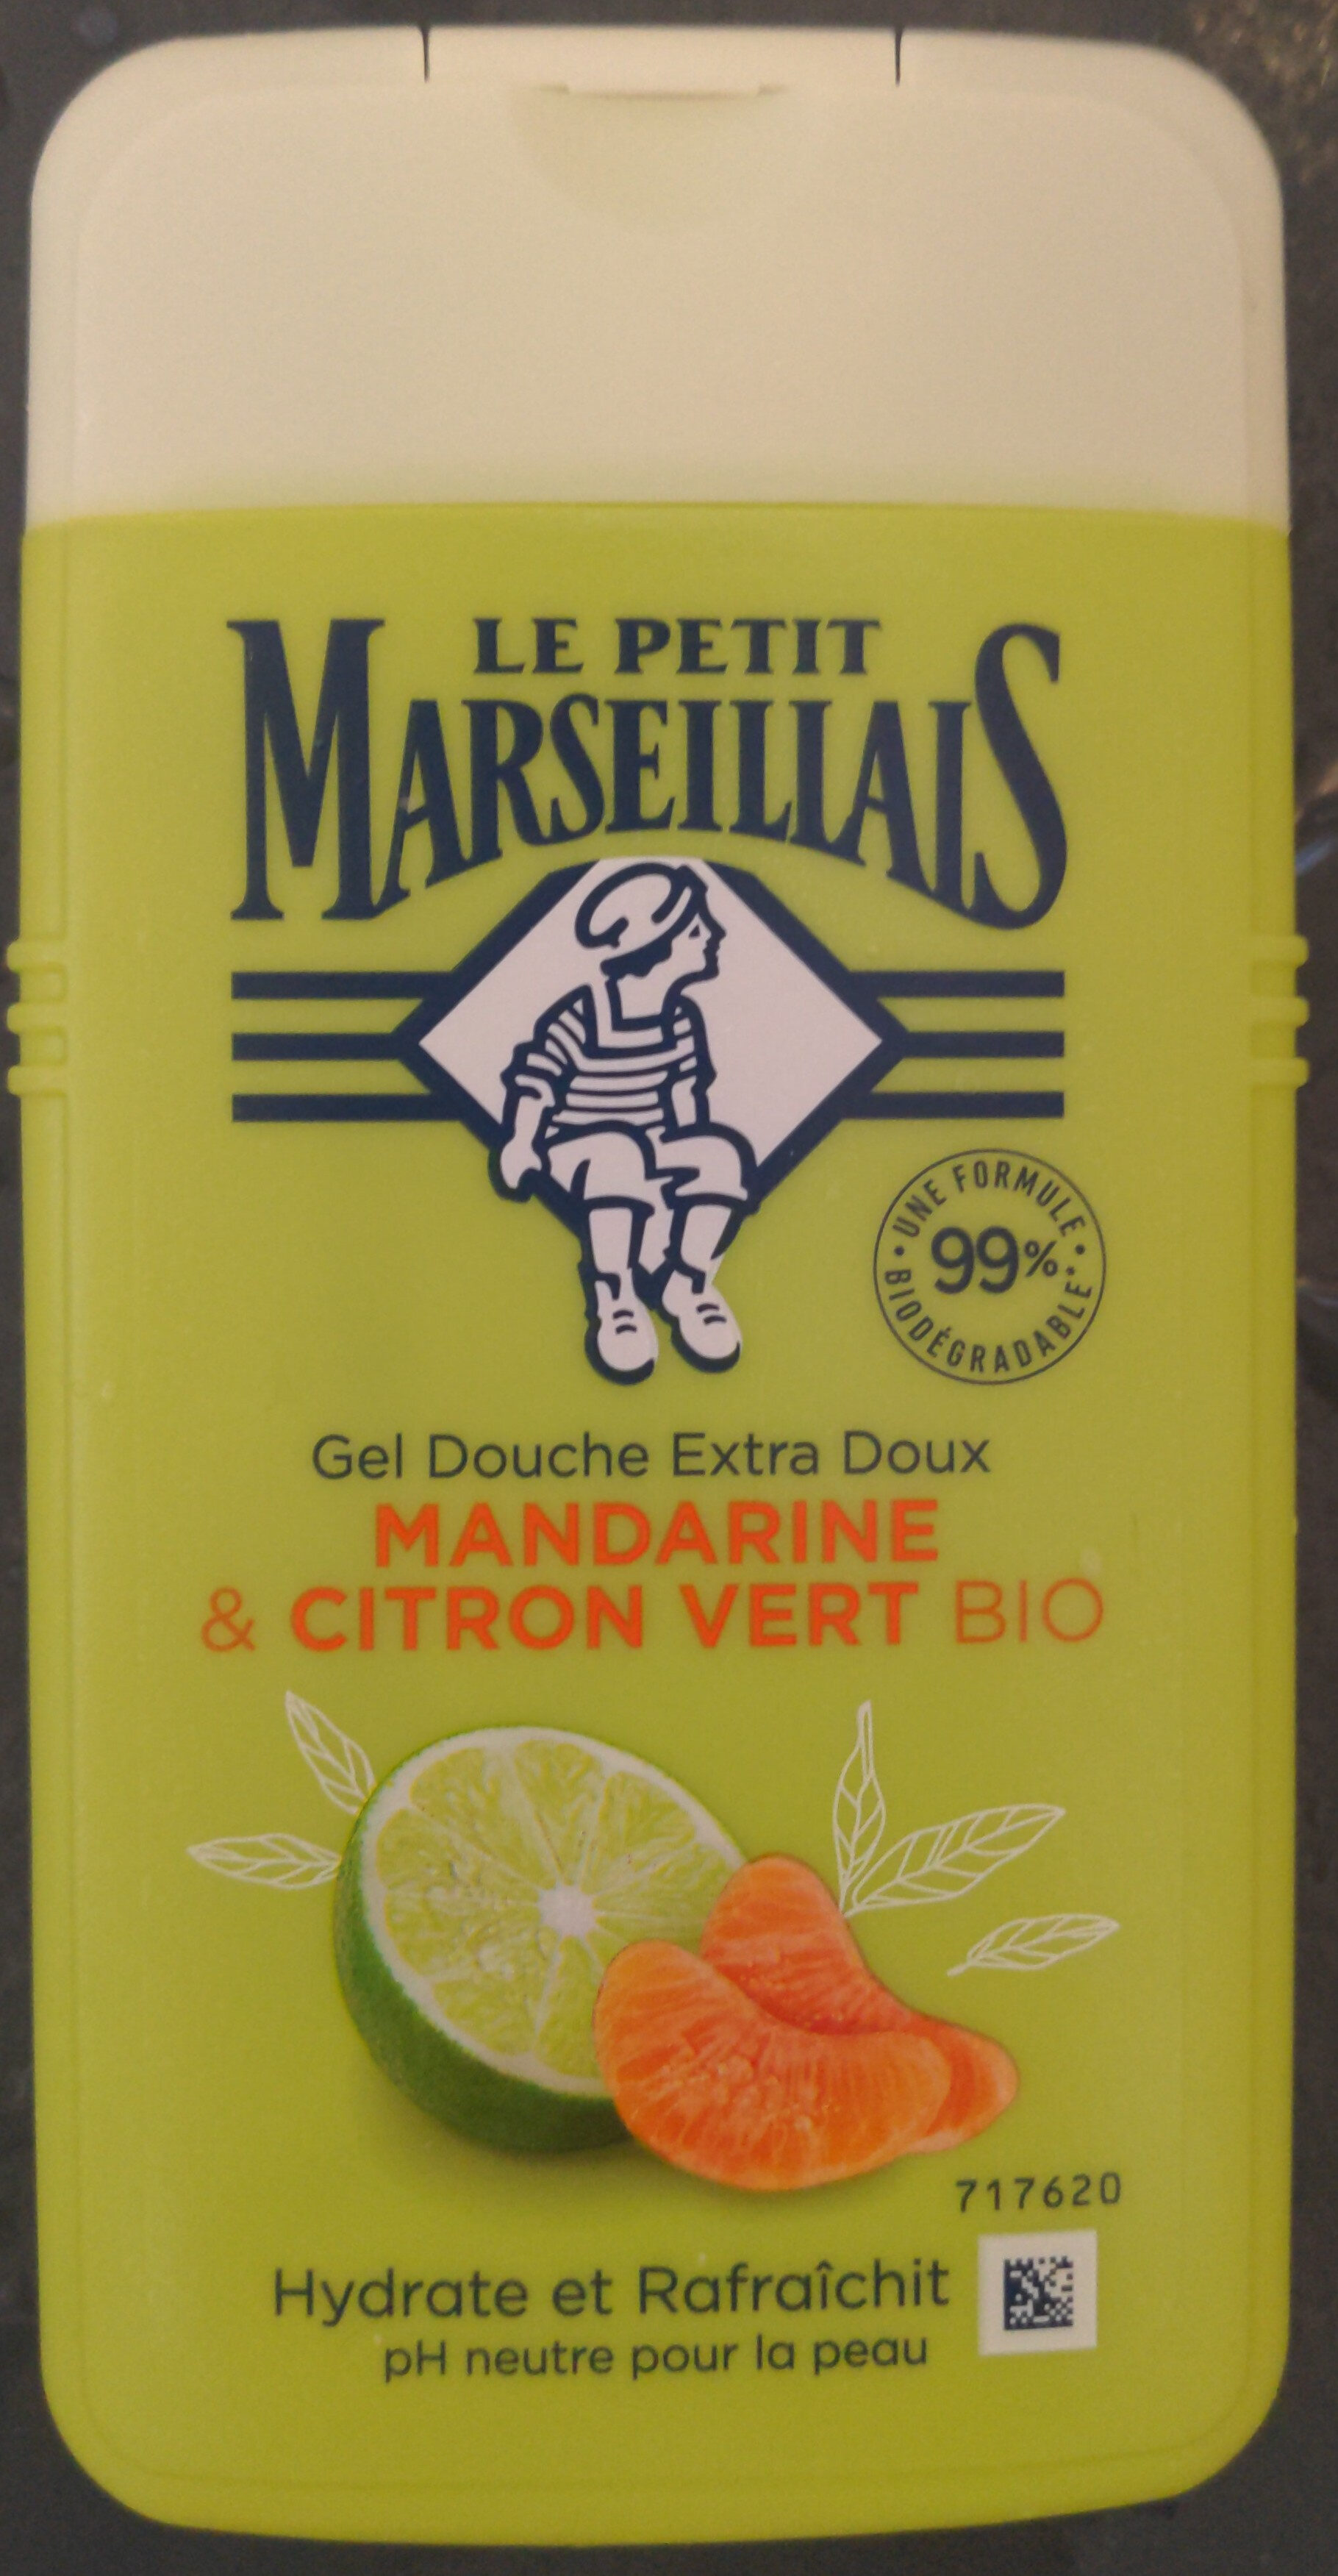 Gel douche extra doux mandarine & citron vert bio - Produit - fr